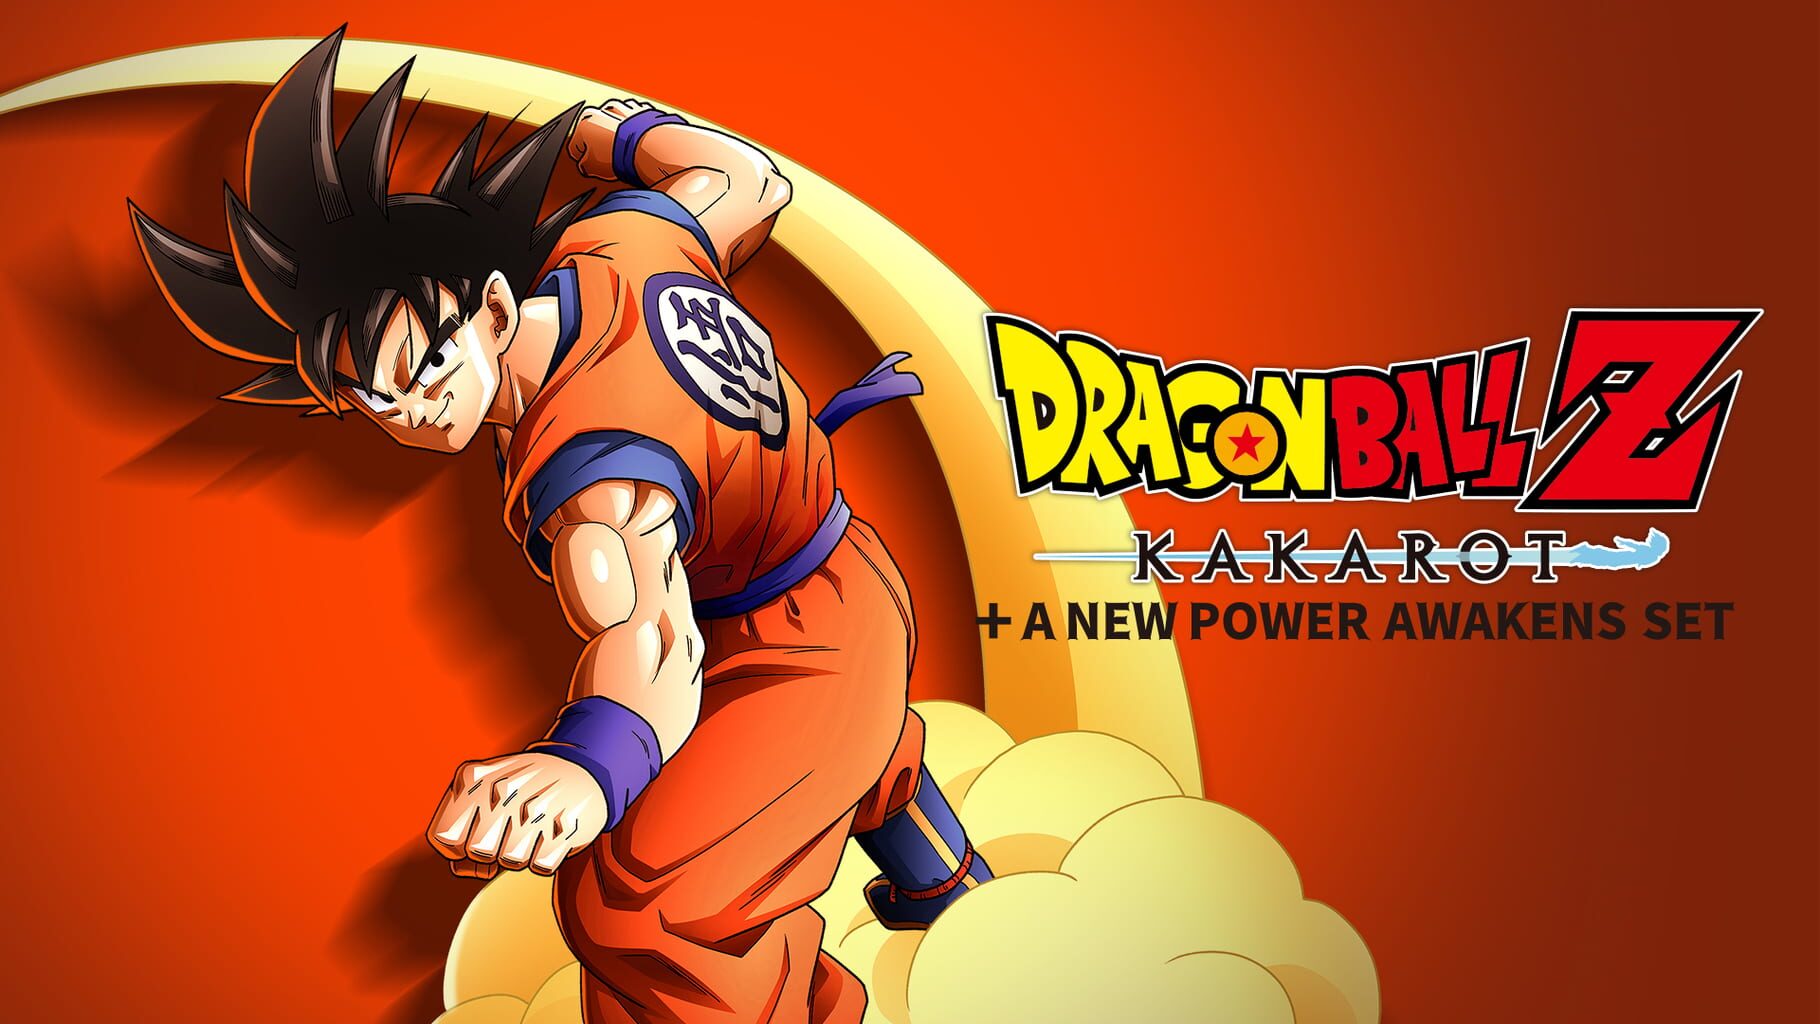 Dragon Ball Z: Kakarot + A New Power Awakens Set artwork